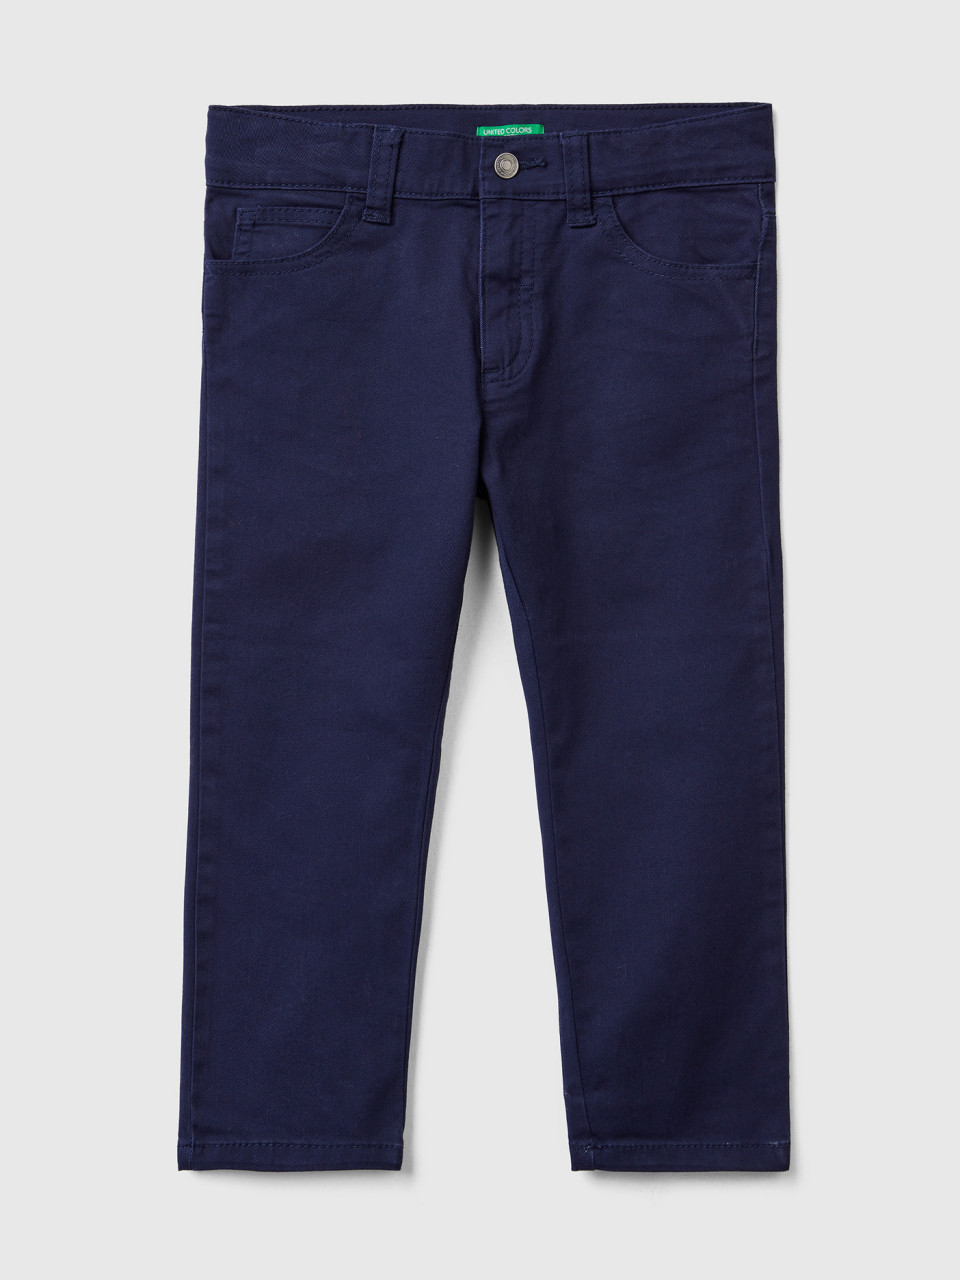 Benetton, Five-pocket Slim Fit Trousers, Dark Blue, Kids